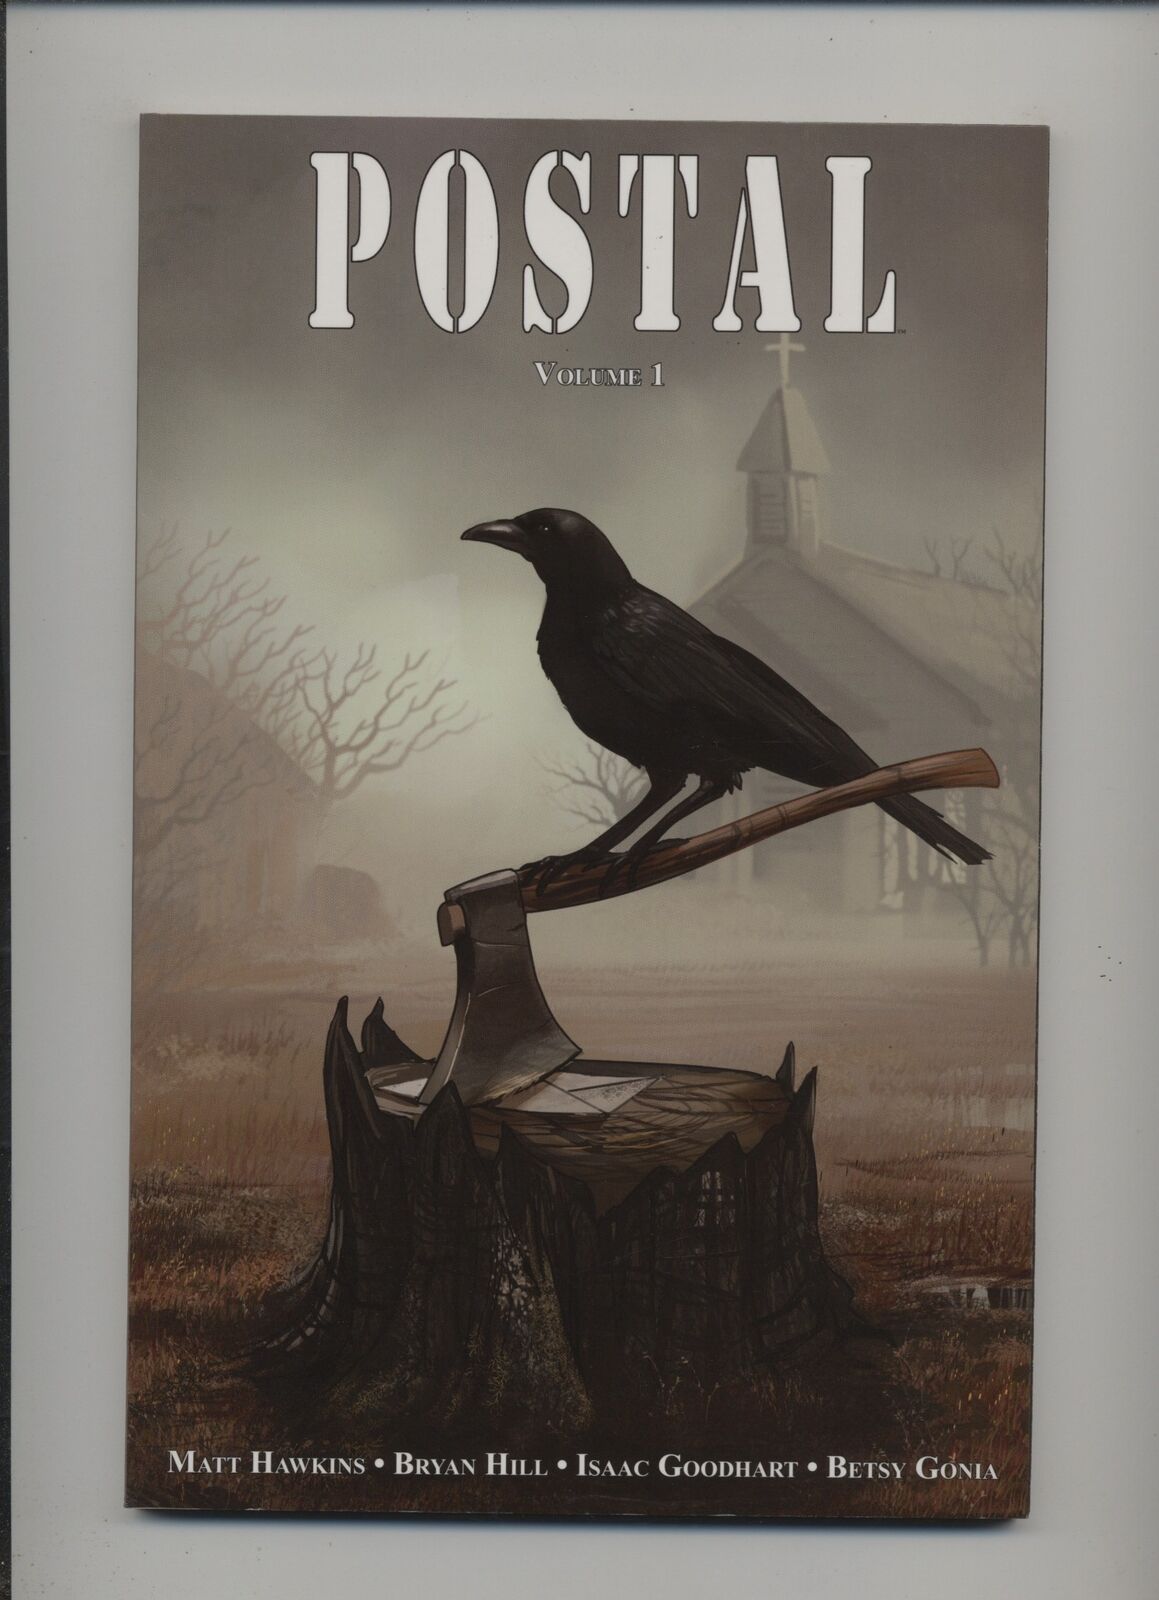 Postal Vol. 1 - Image - 2015 - TPB